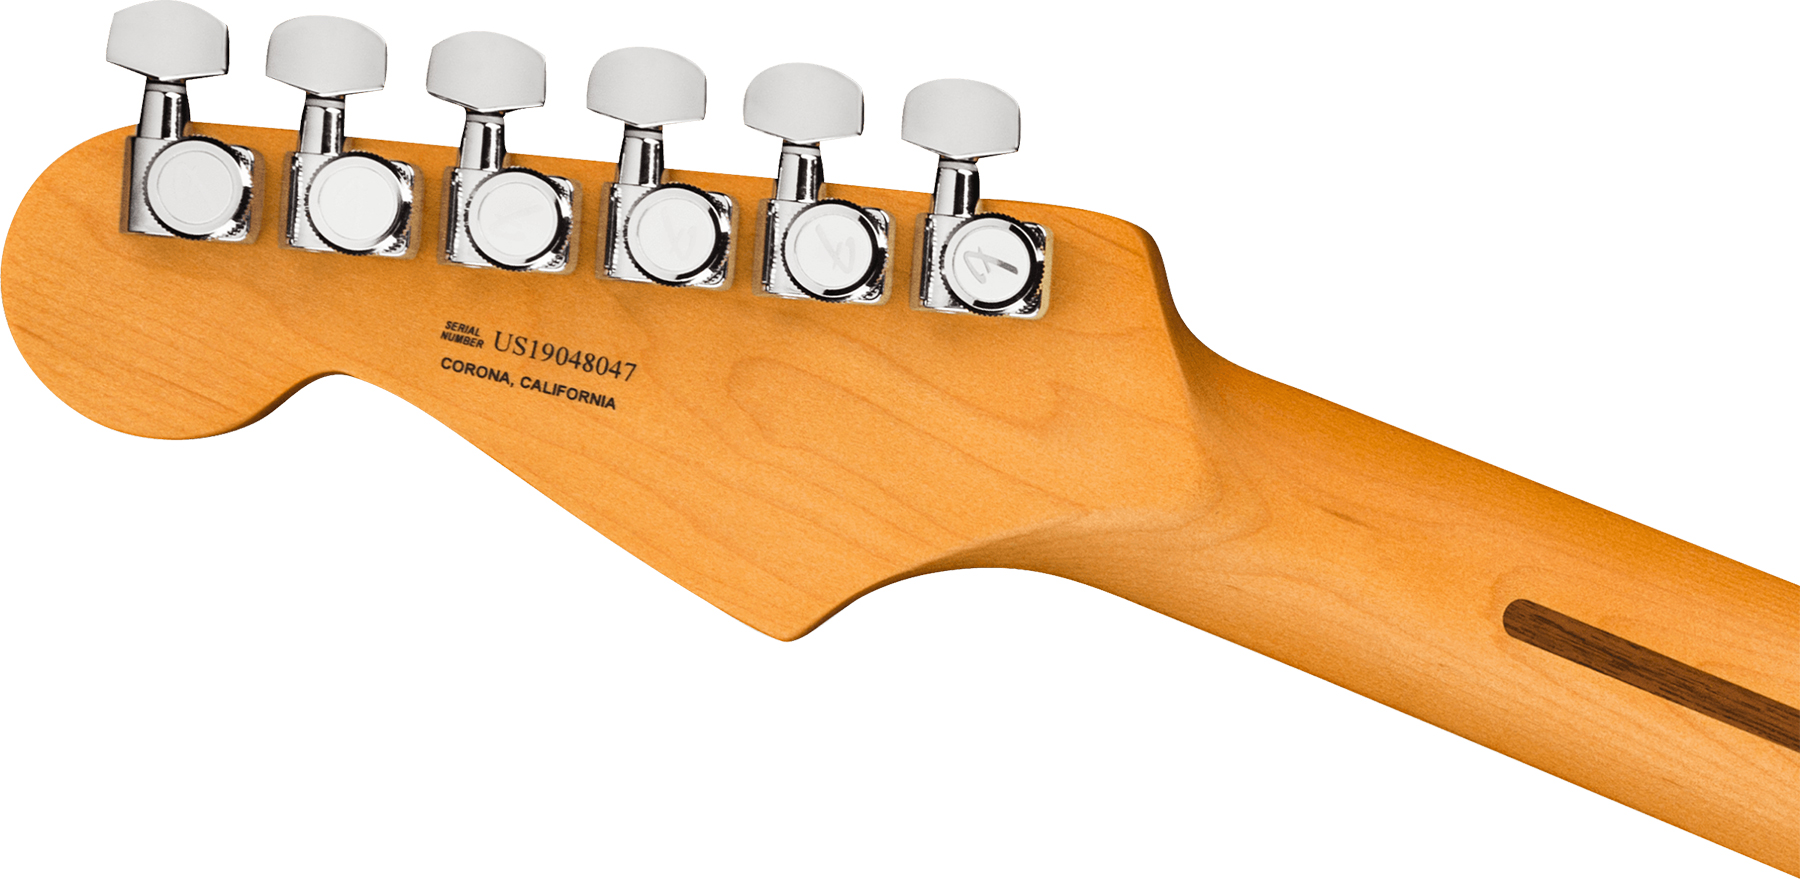 Fender Strat American Ultra 2019 Usa Rw - Ultraburst - Str shape electric guitar - Variation 3